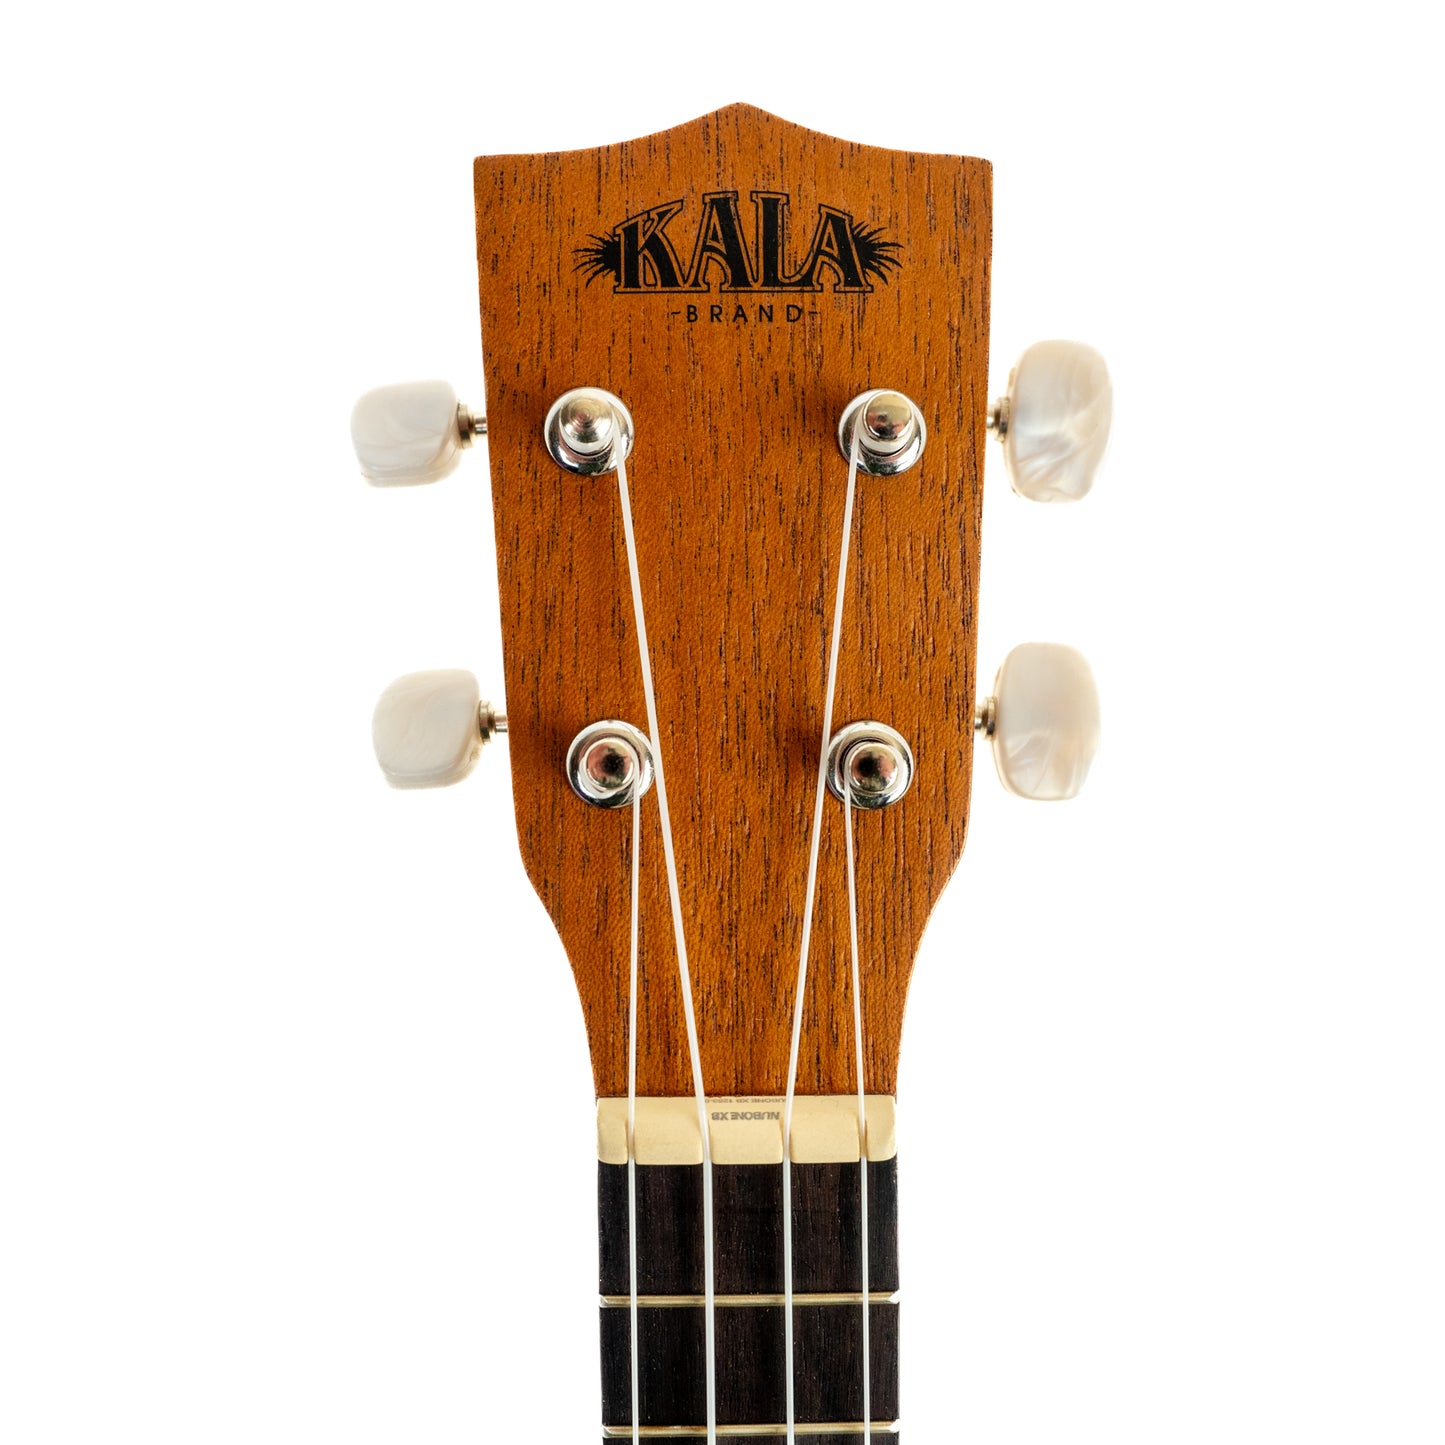 Kala learn to play Soprano ukulele with deluxe gigbag accessory bundle